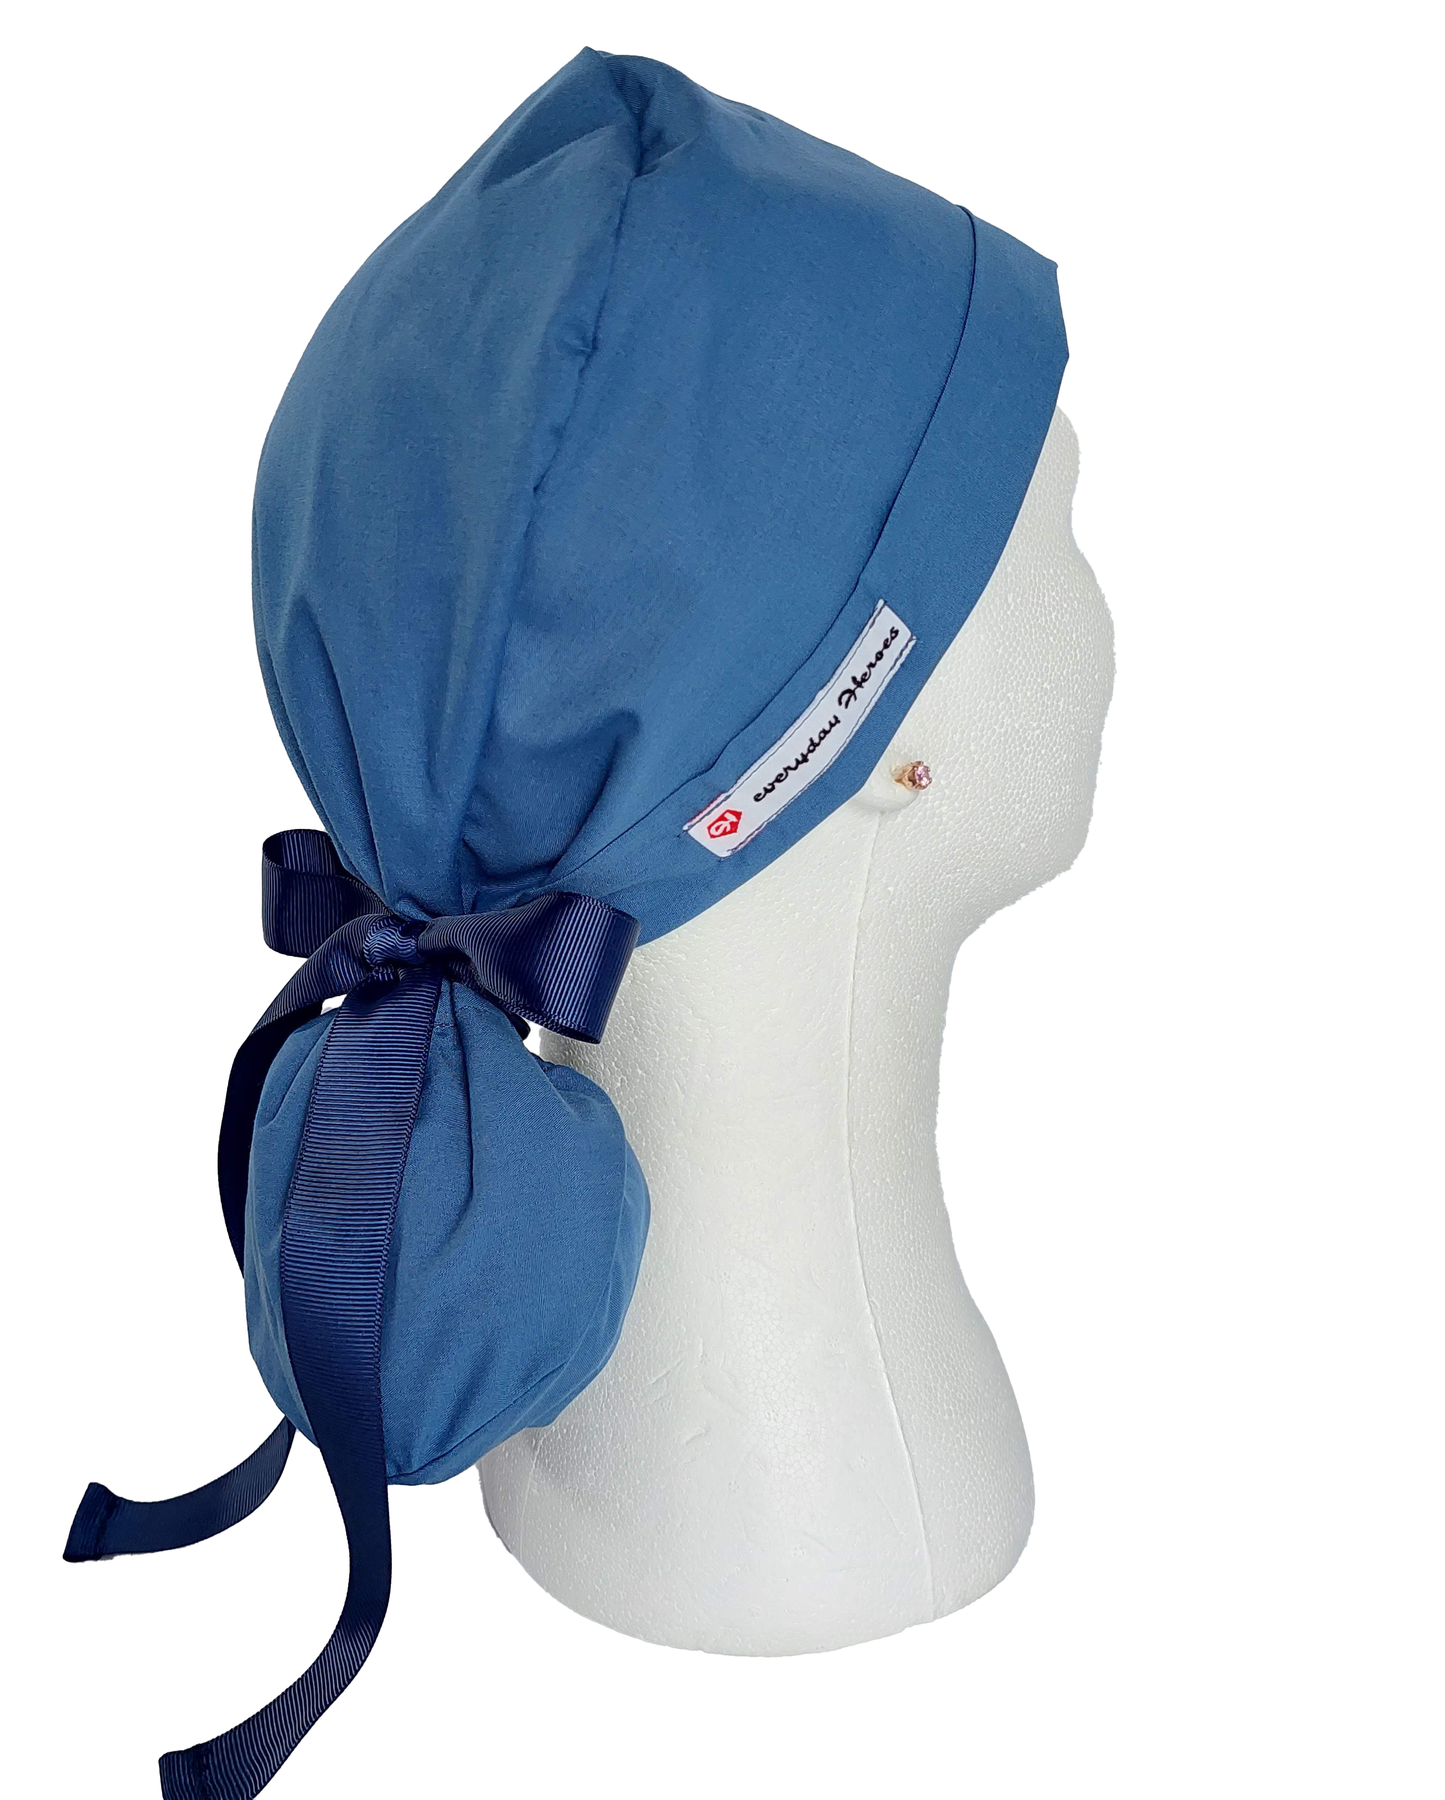 Ponytail Scrub Cap -  Surgical Cap Solid Blue Sea - [scrub_hat]-[scrub_cap_for_women]-[surgical_cap]